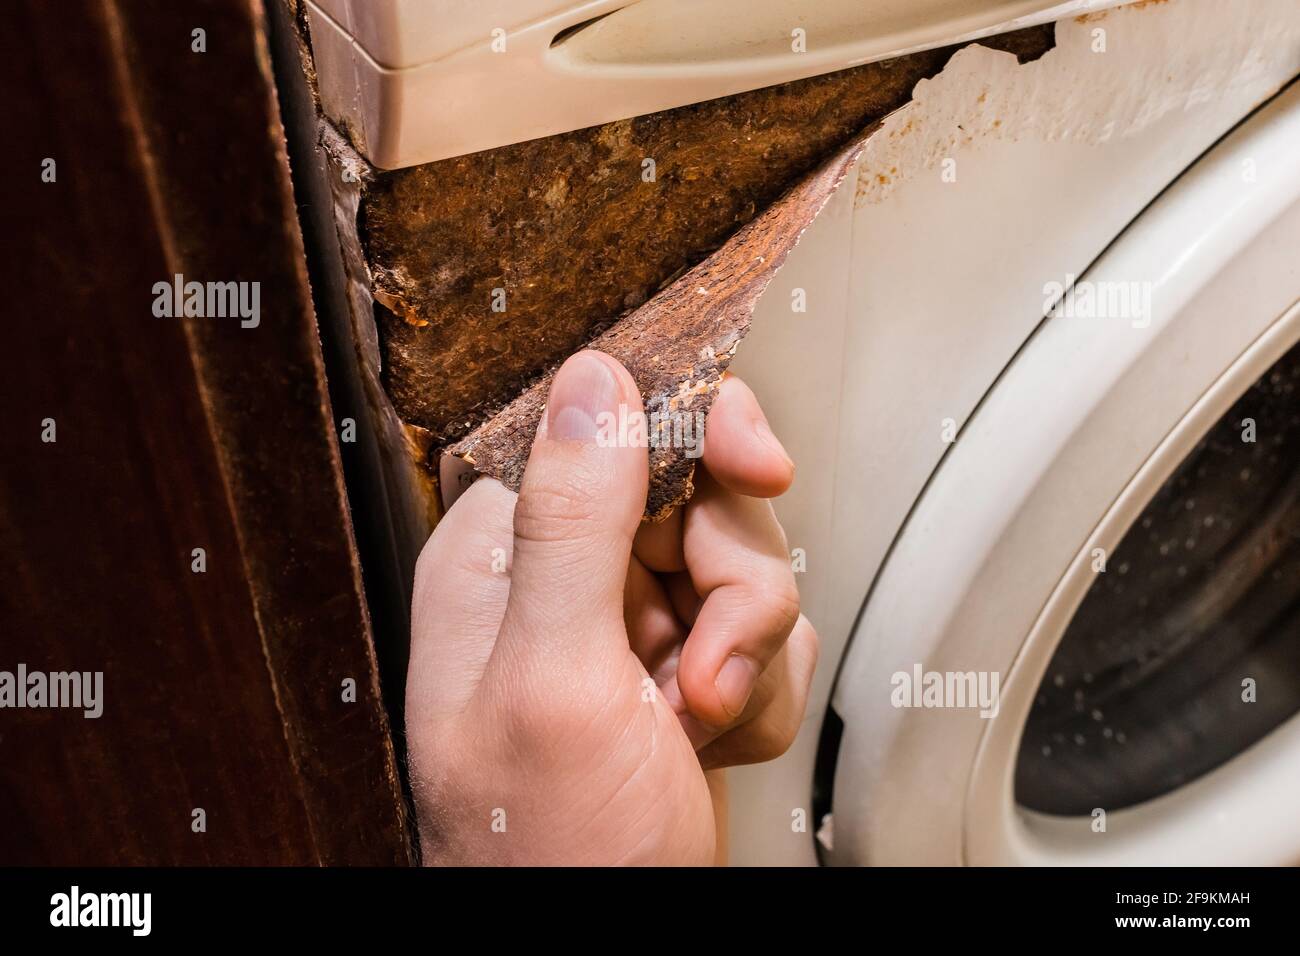 Cajón de lavadora e imágenes de resolución - Alamy